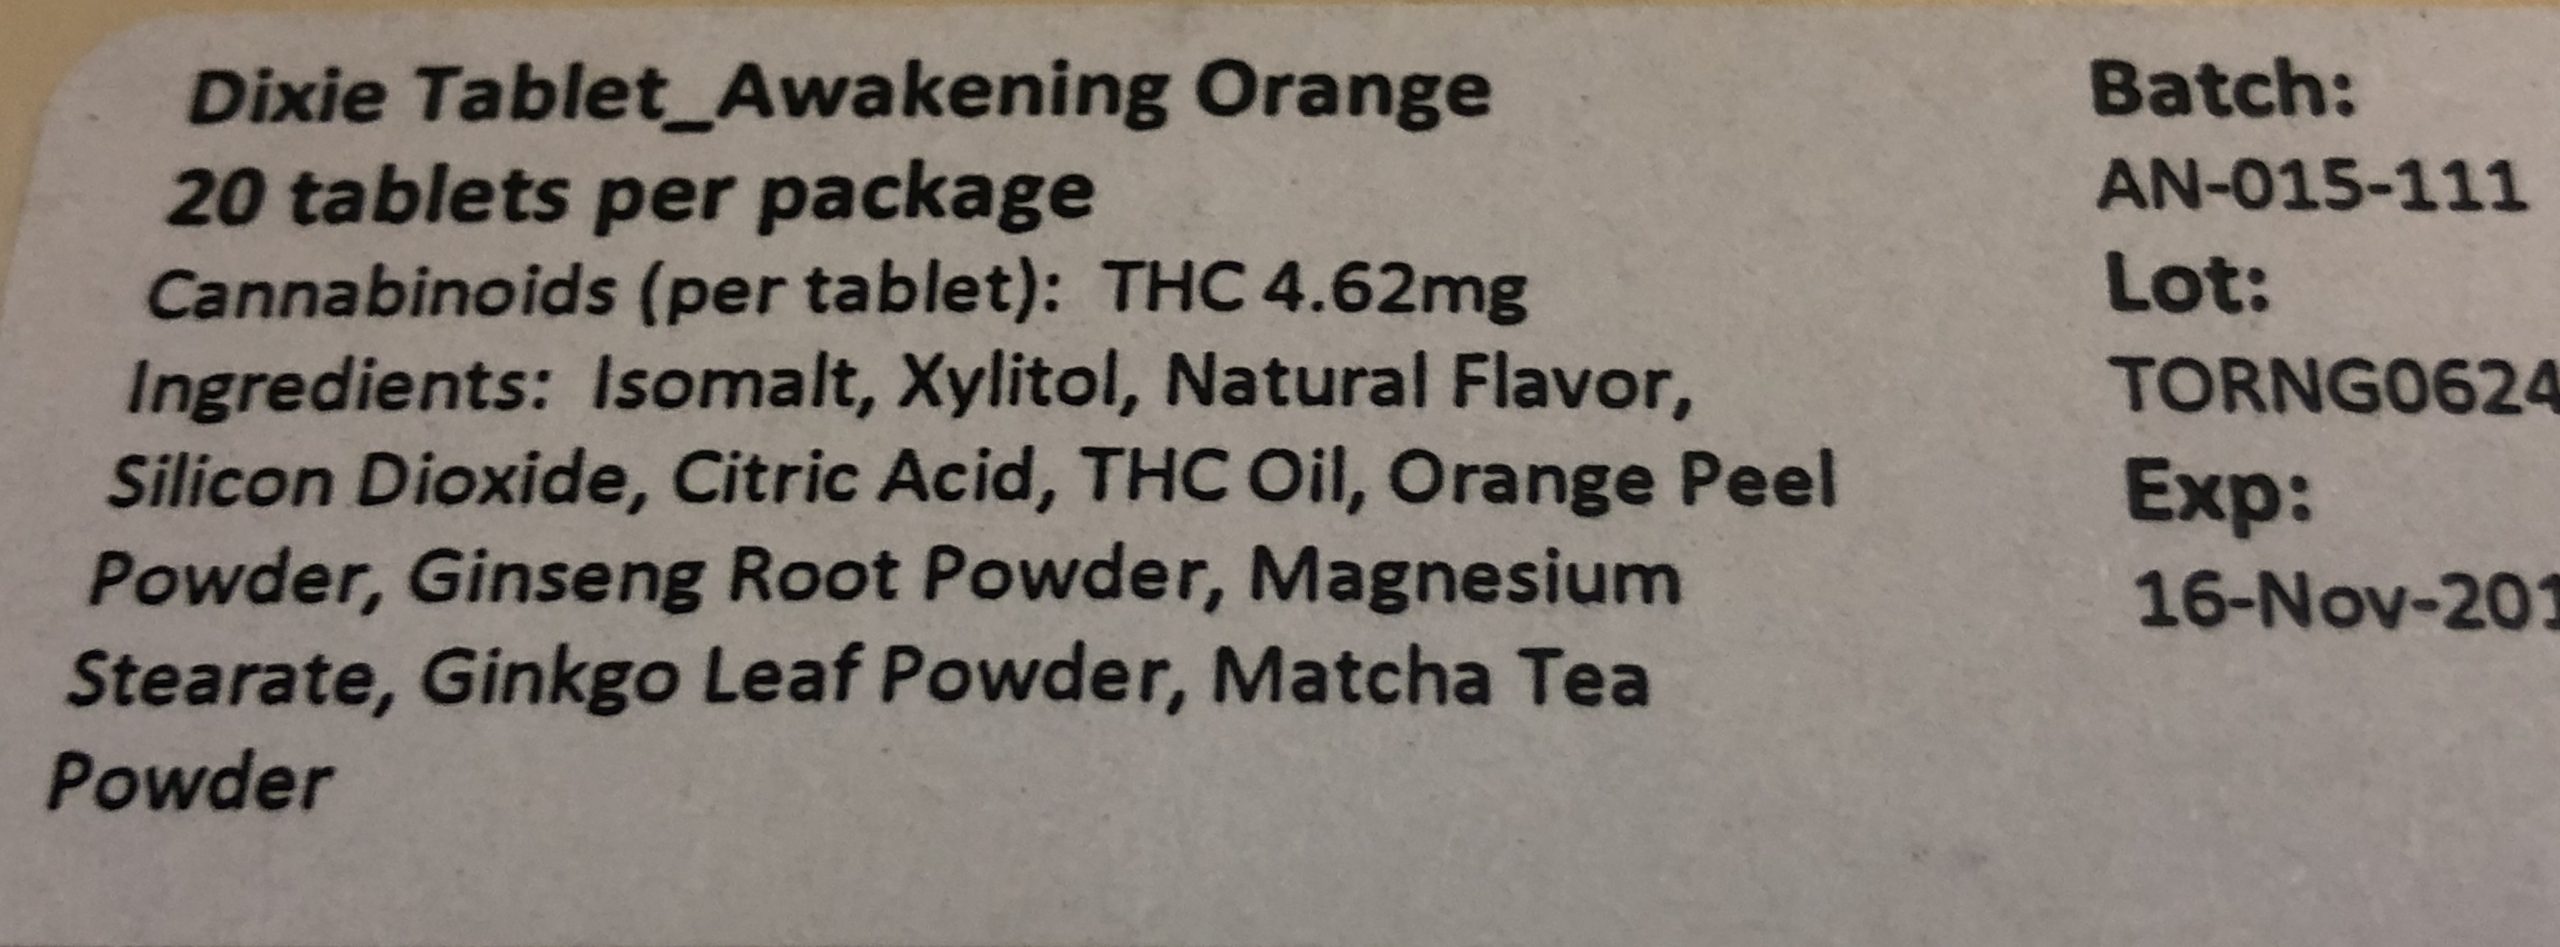 Dixie Awakening Orange Zest Tablets ingredients